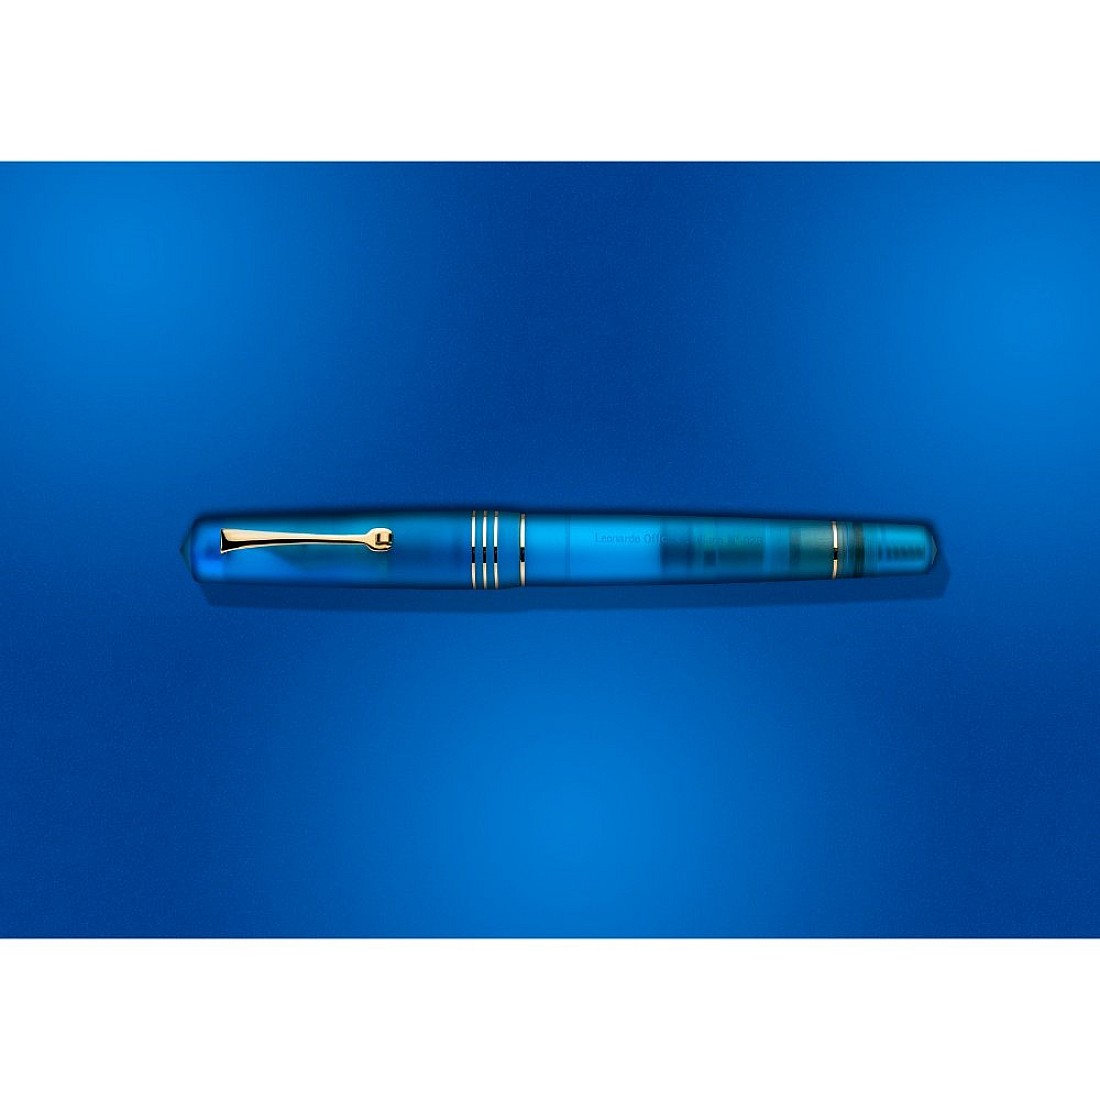 Leonardo Momento Zero Grande Pura Demonstrator Blue Acqua RT Fountain pen